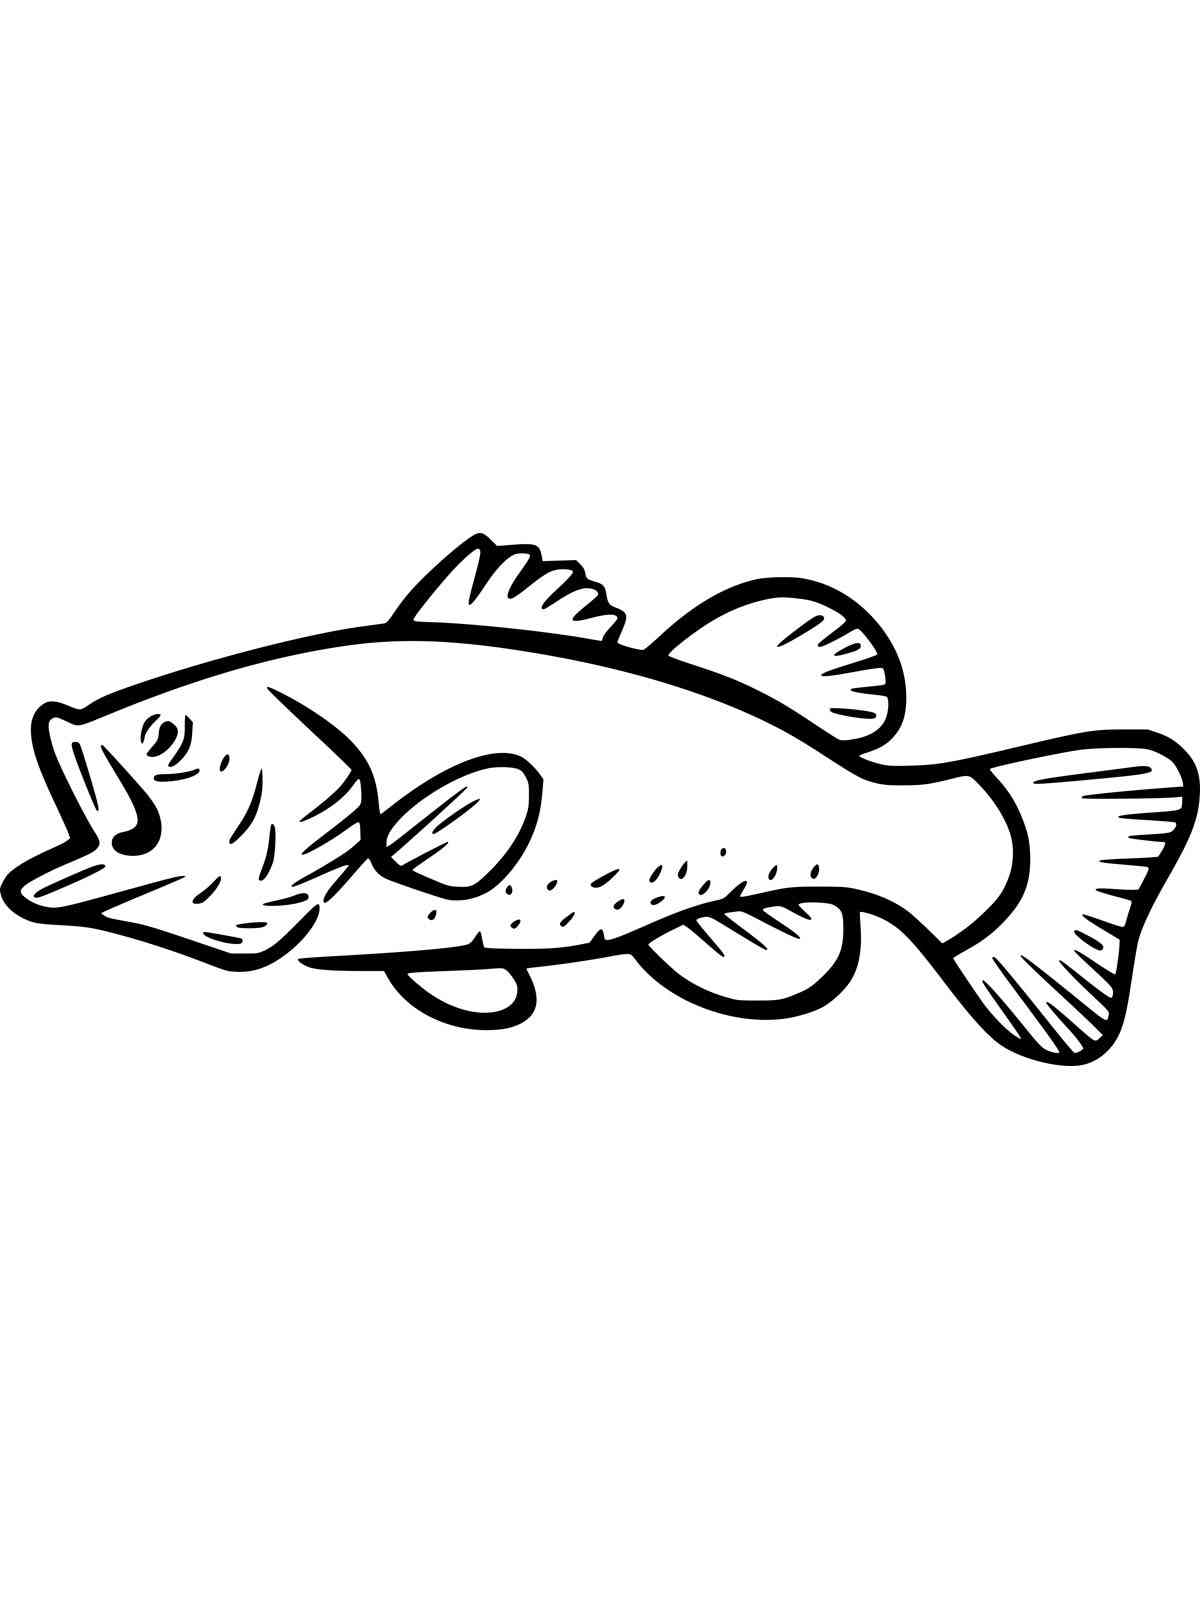 Bass Fish 12 coloring page